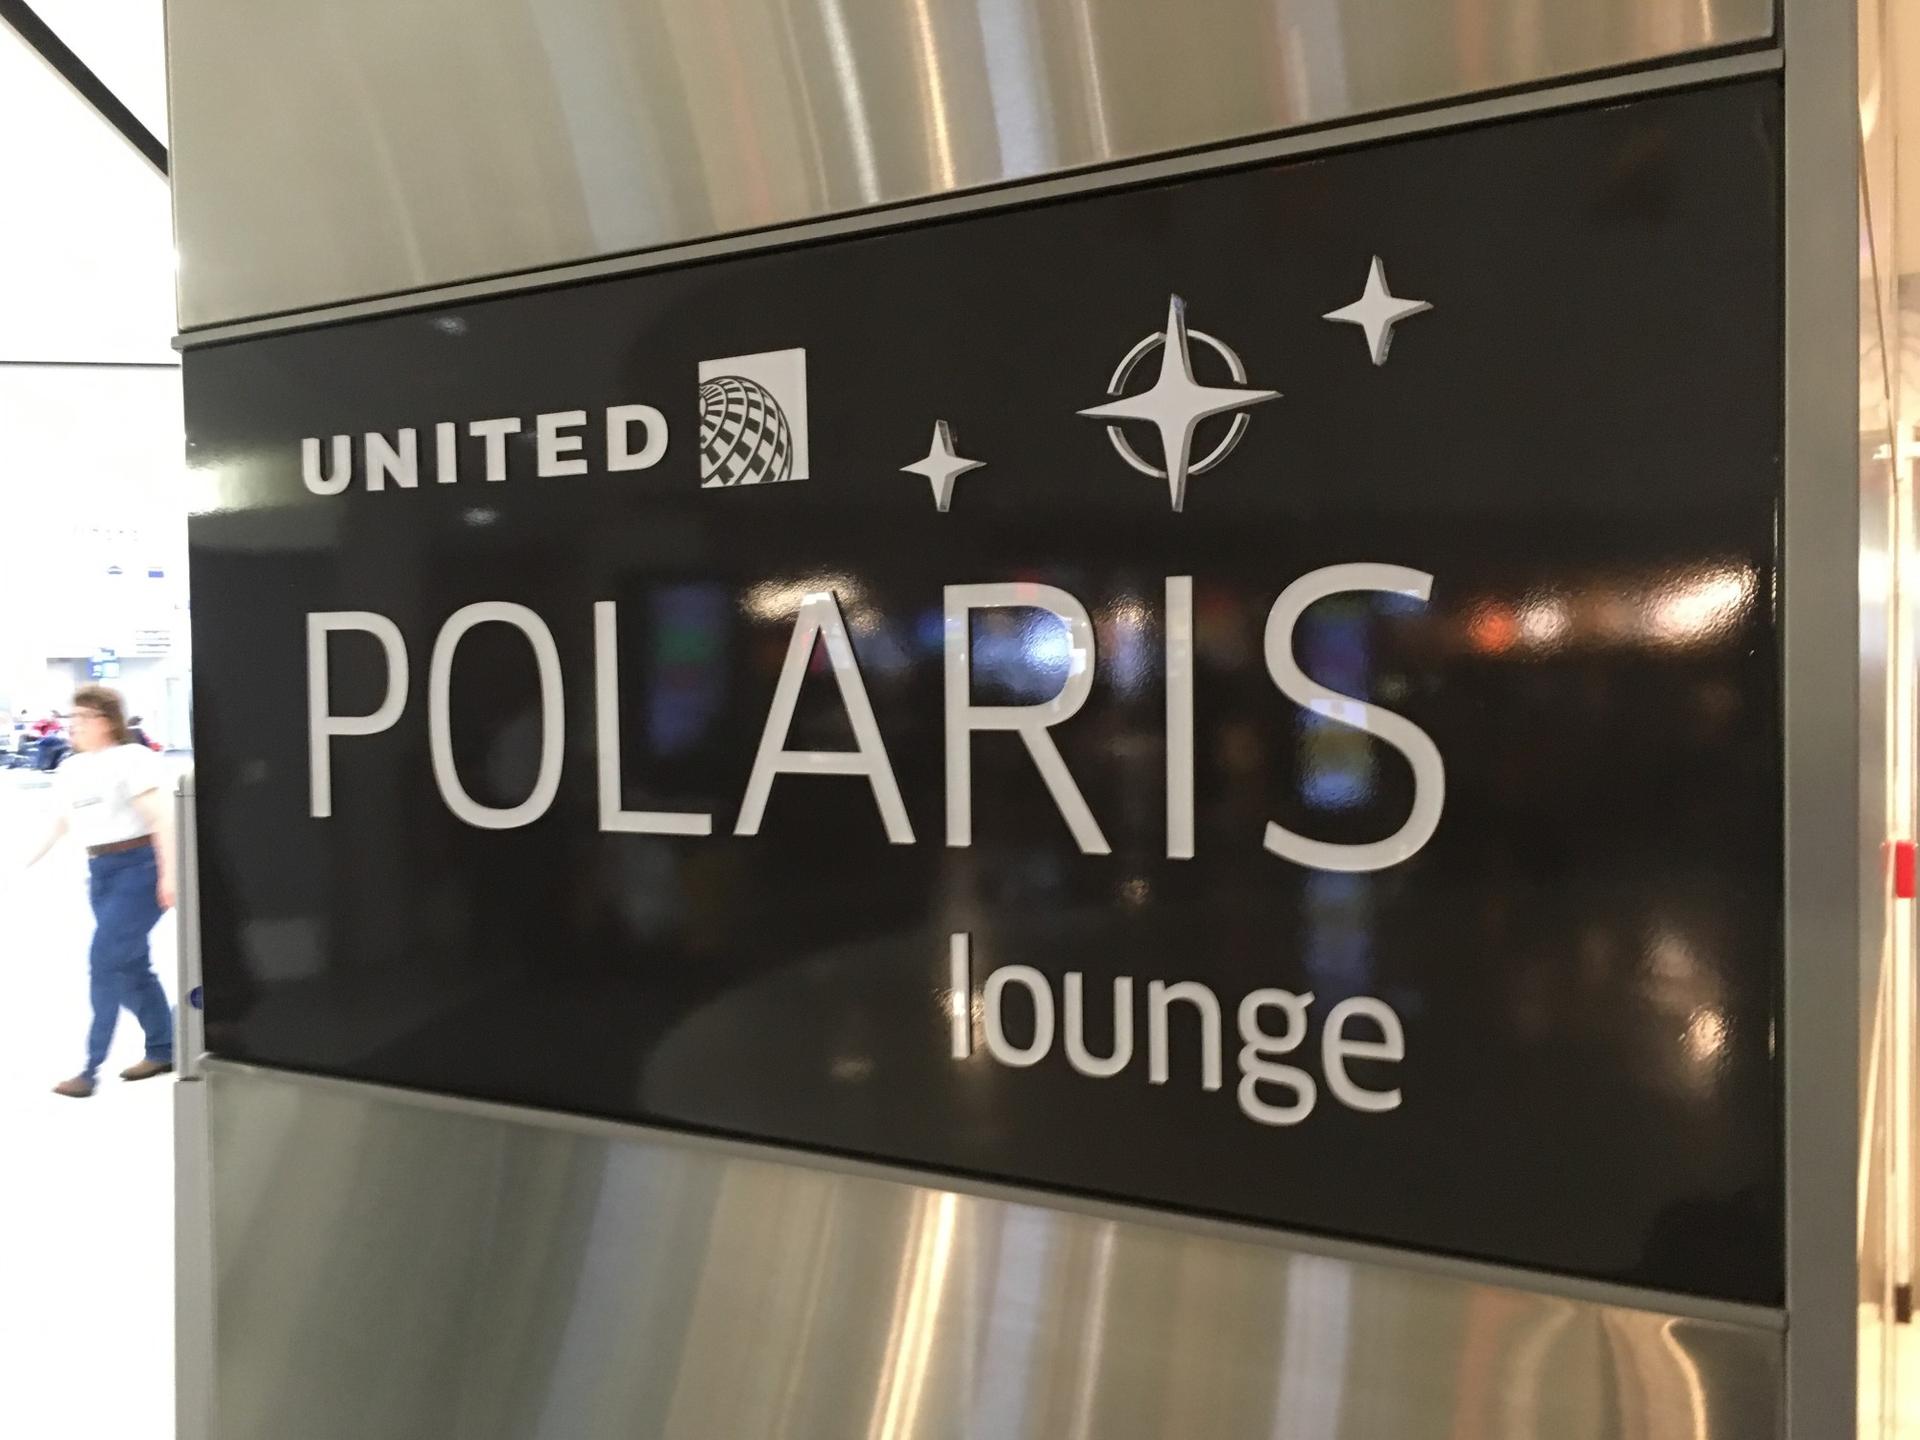 United Airlines Polaris Lounge image 15 of 84